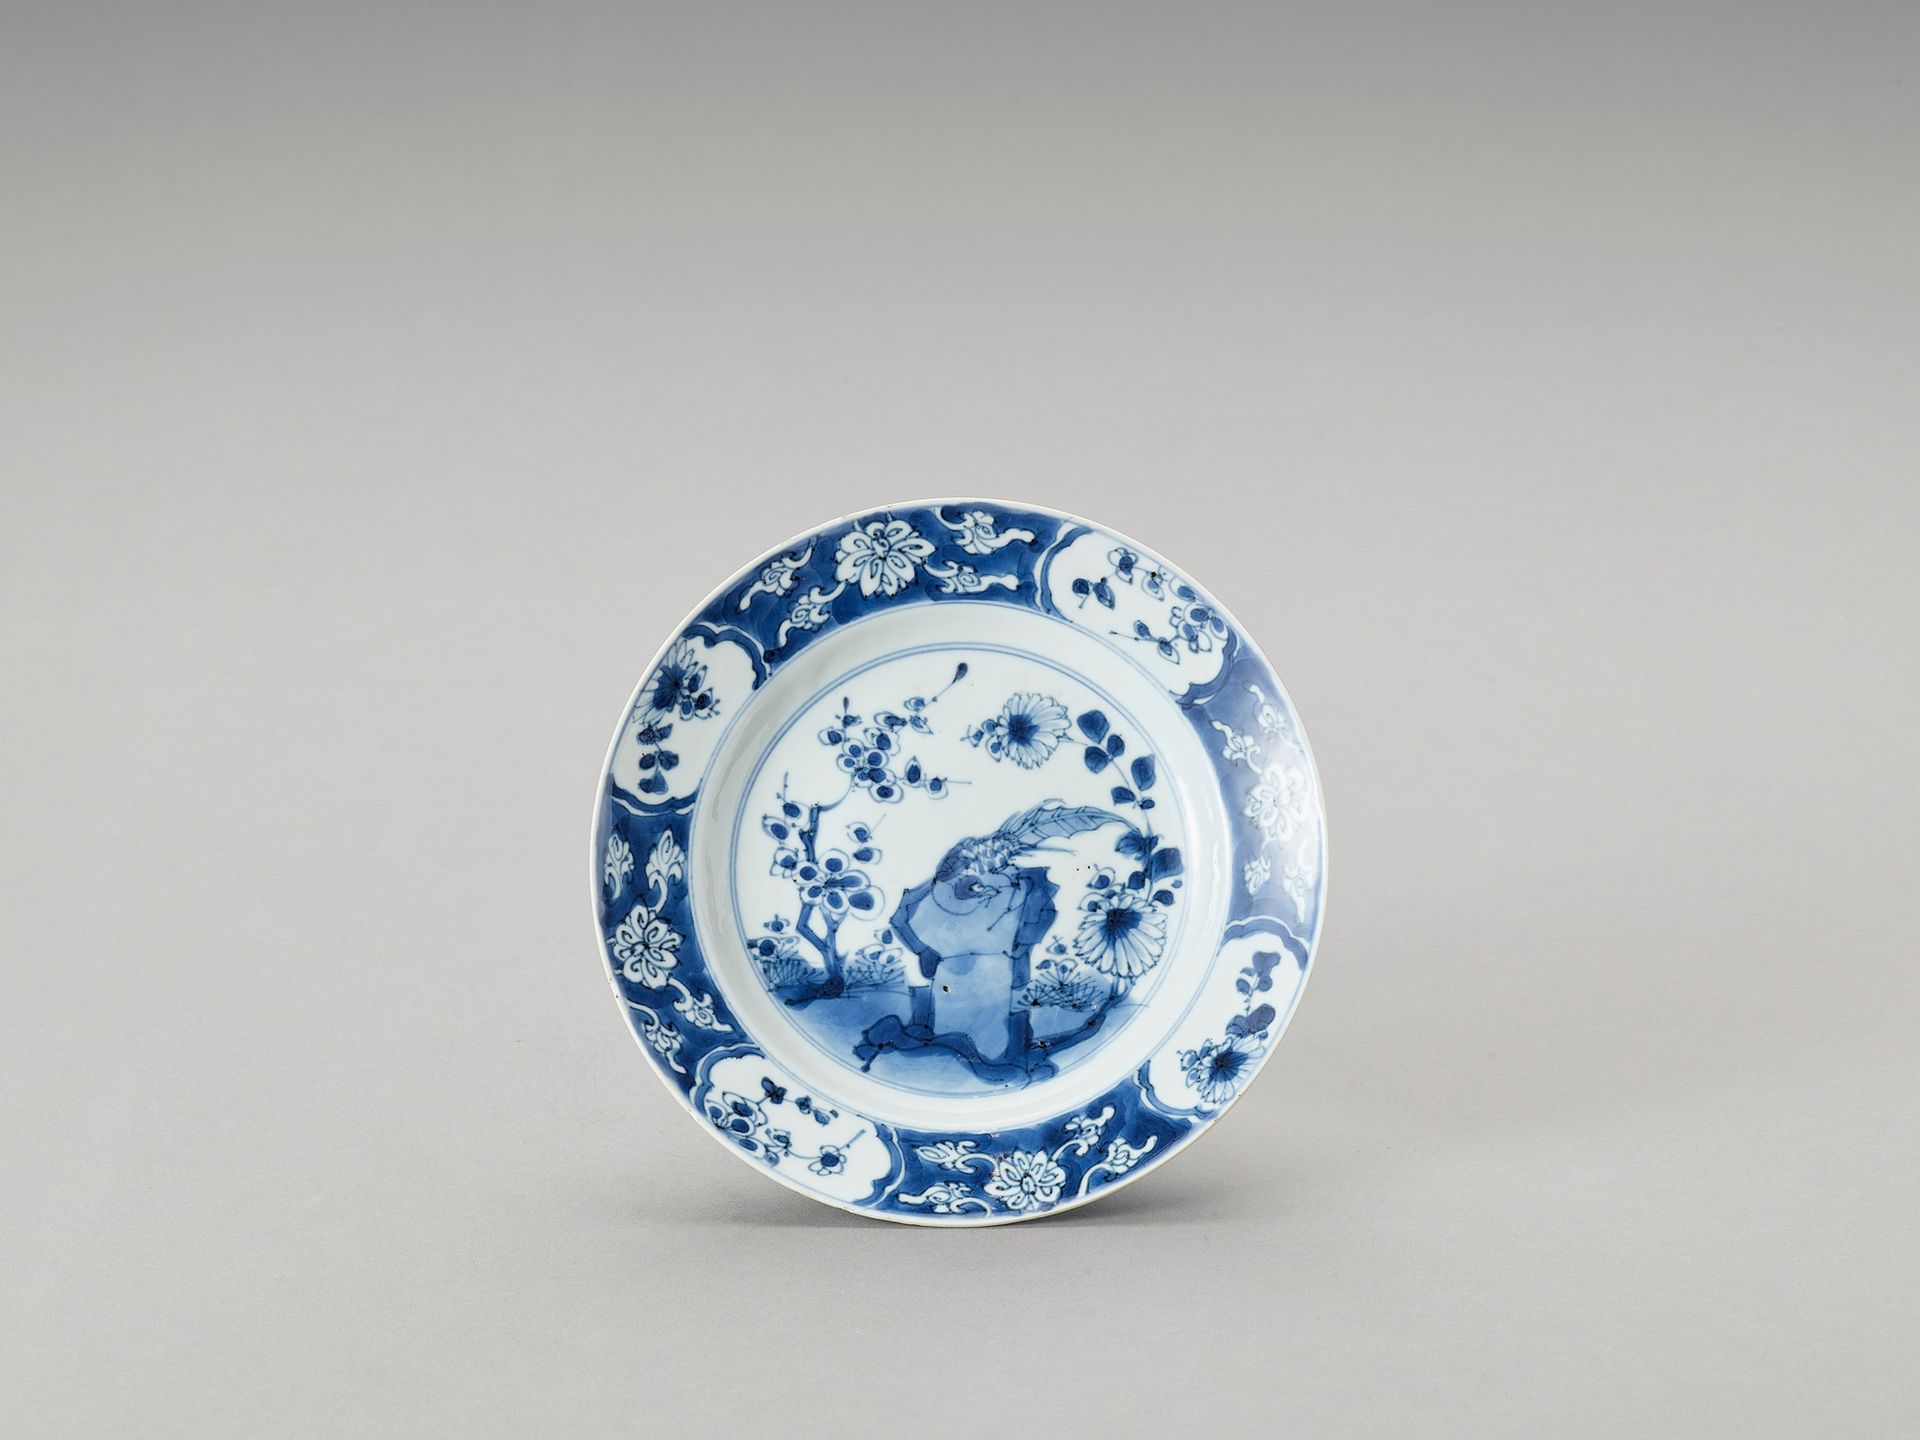 A Blue and White Porcelain Dish 青花瓷碟
中国，康熙时期（1662-1722）。釉下蓝彩绘一圈鸟儿栖息在岩石上的花枝上，边缘镶有&hellip;